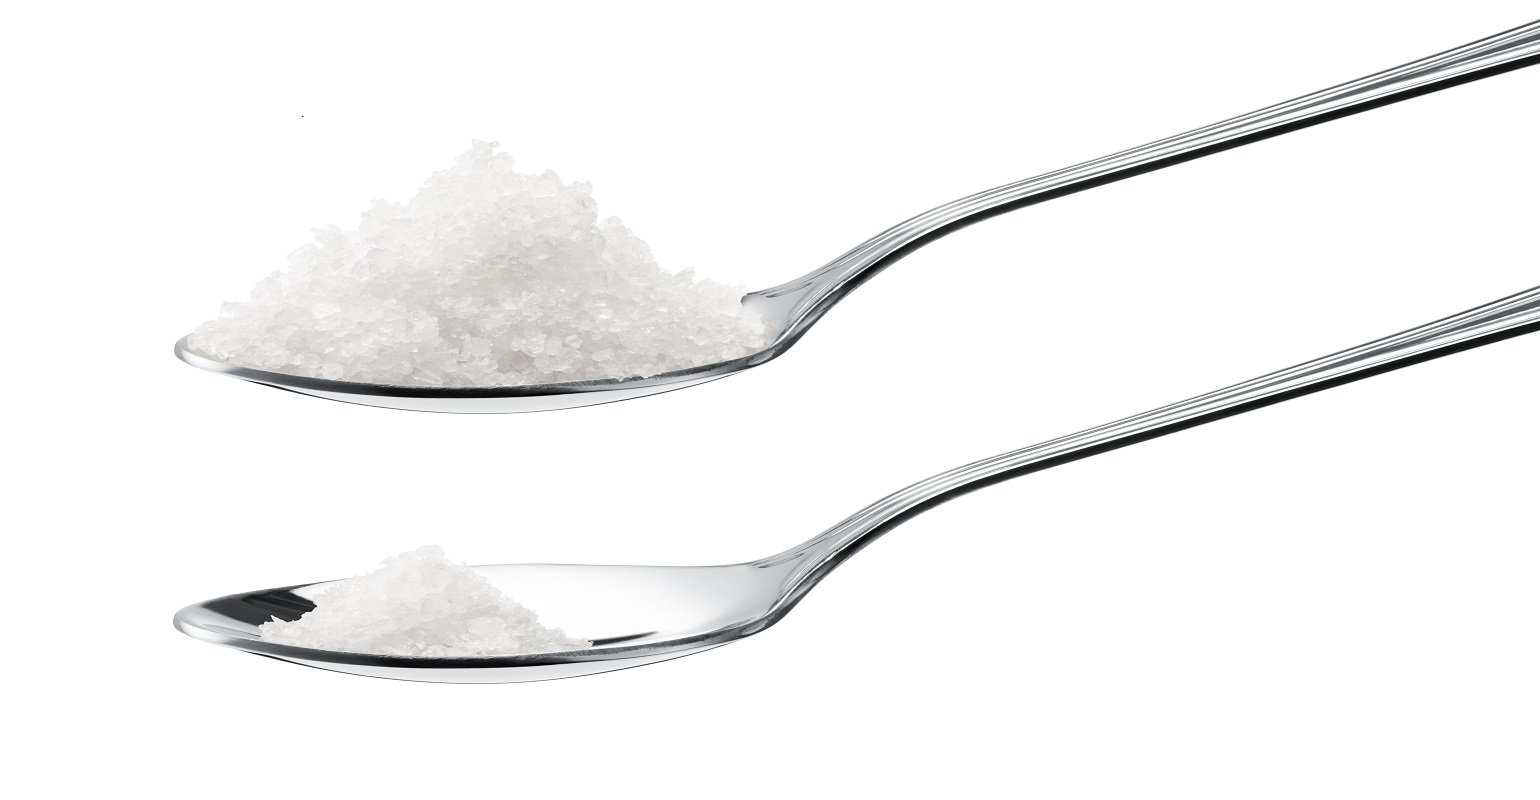 FDA could permit salt substitutes for standardized foods